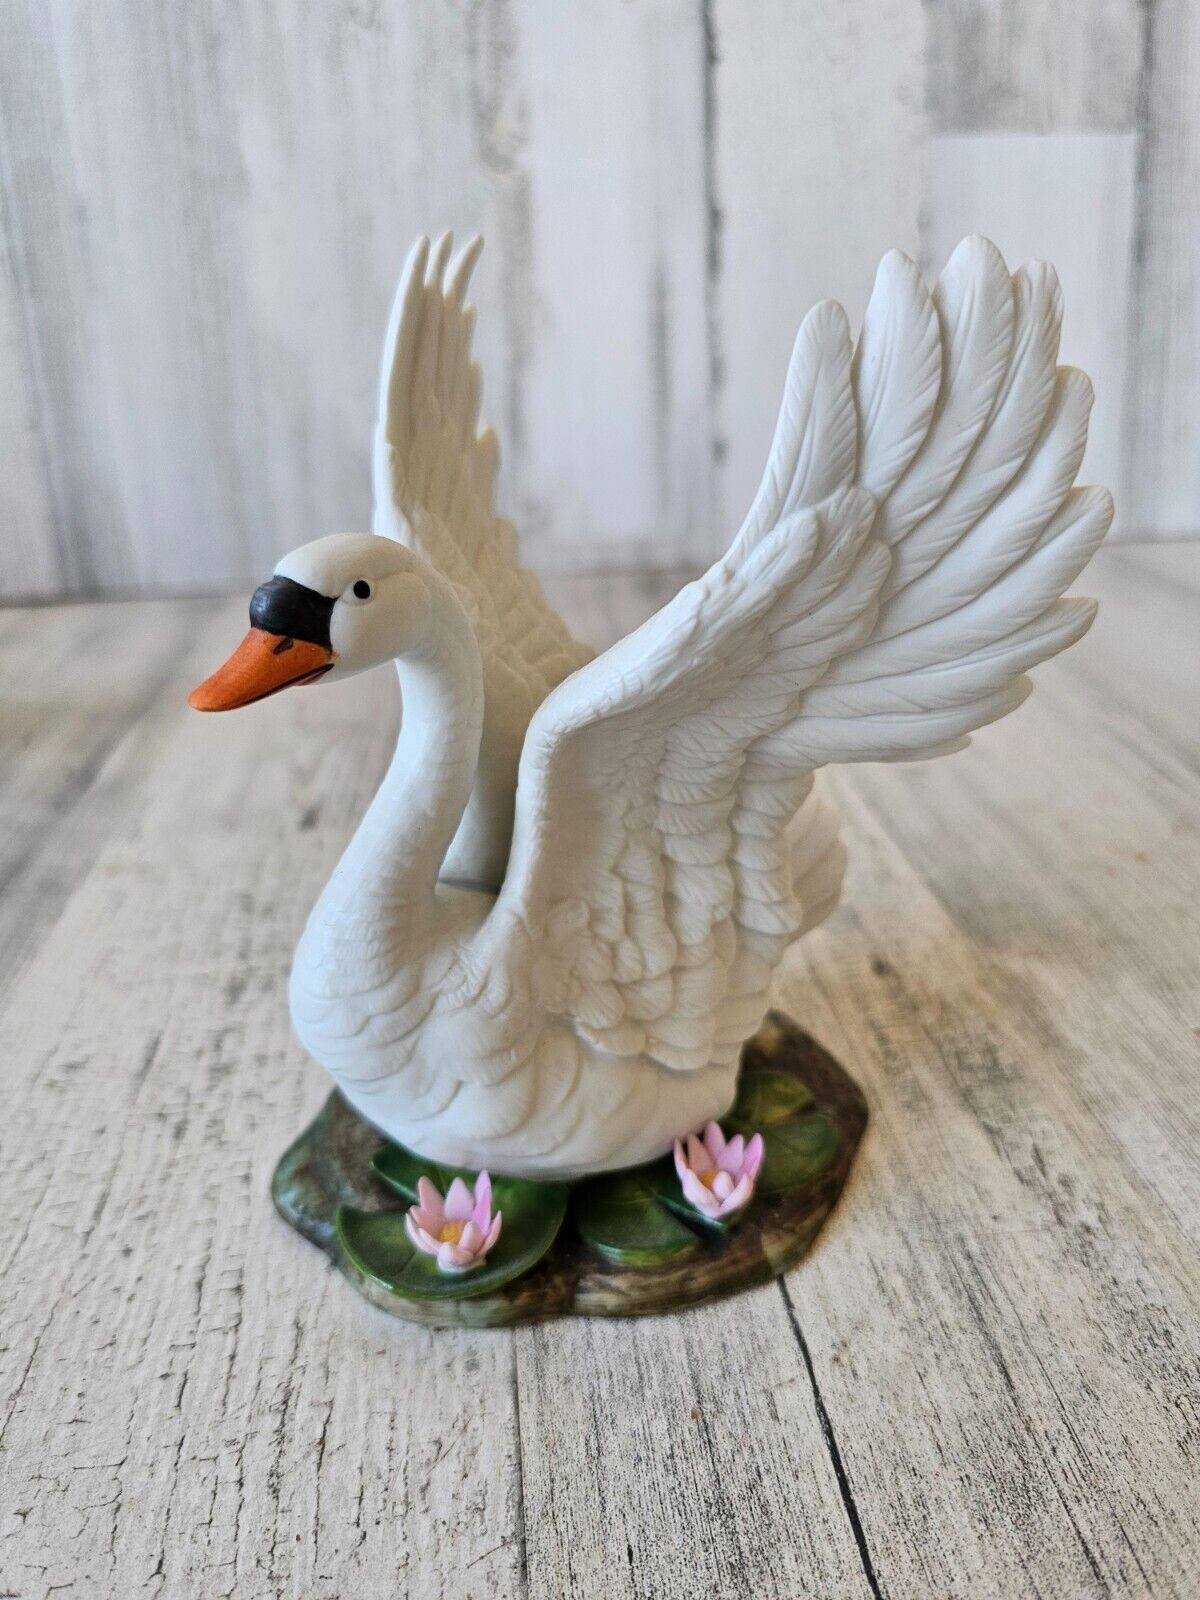 Andrea mute swan bird 6318 vintage statue porcelain figurine lifelike realistic